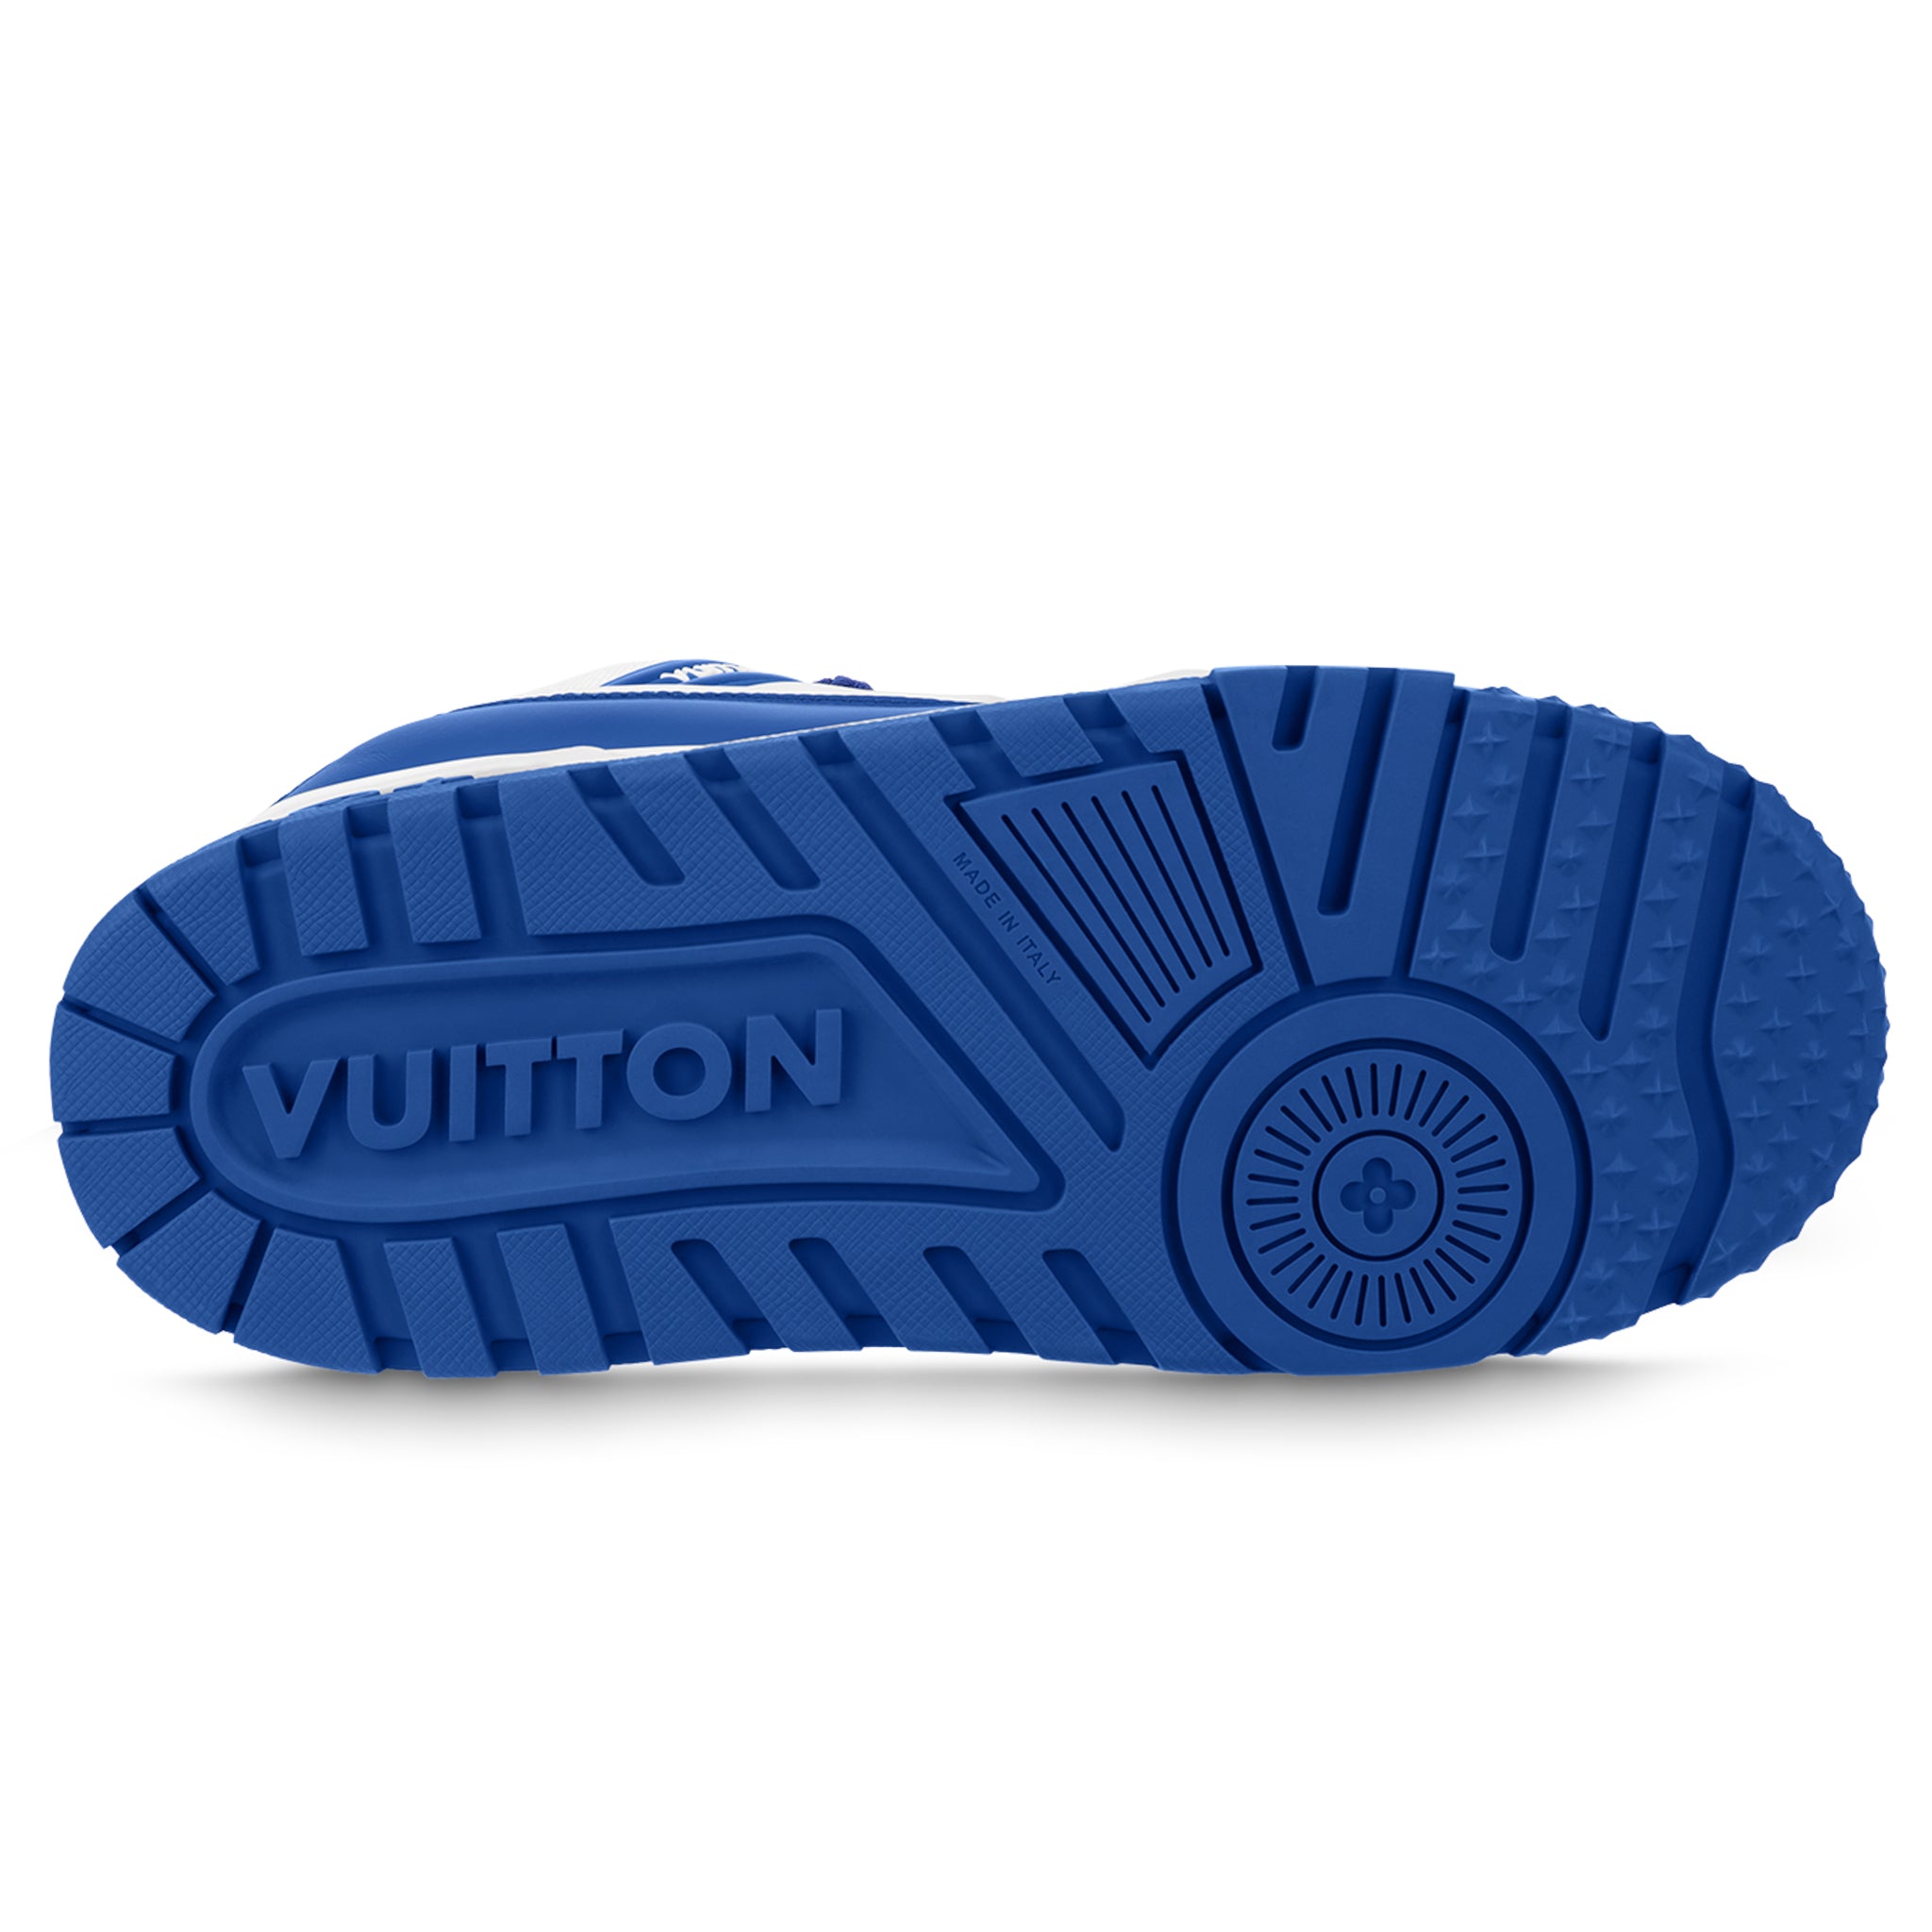 Sole view of Louis Vuitton LV Maxi Trainer 1ABZPU Blue Sneaker